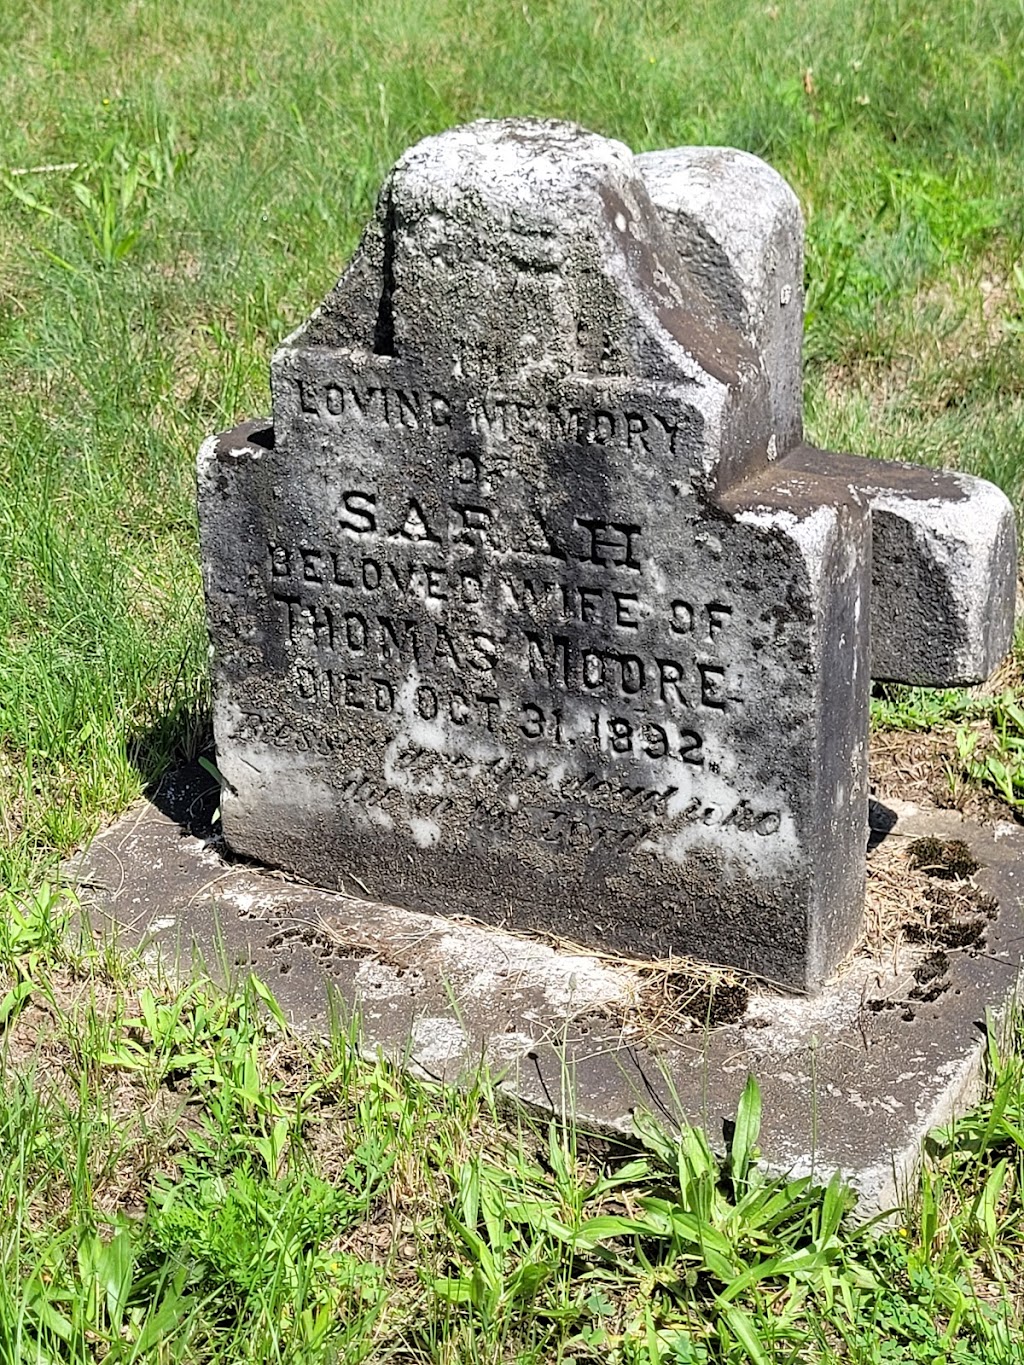 Sir John A. Macdonald Gravesite | Cataraqui North, Kingston, ON K7M, Canada | Phone: (613) 546-6545